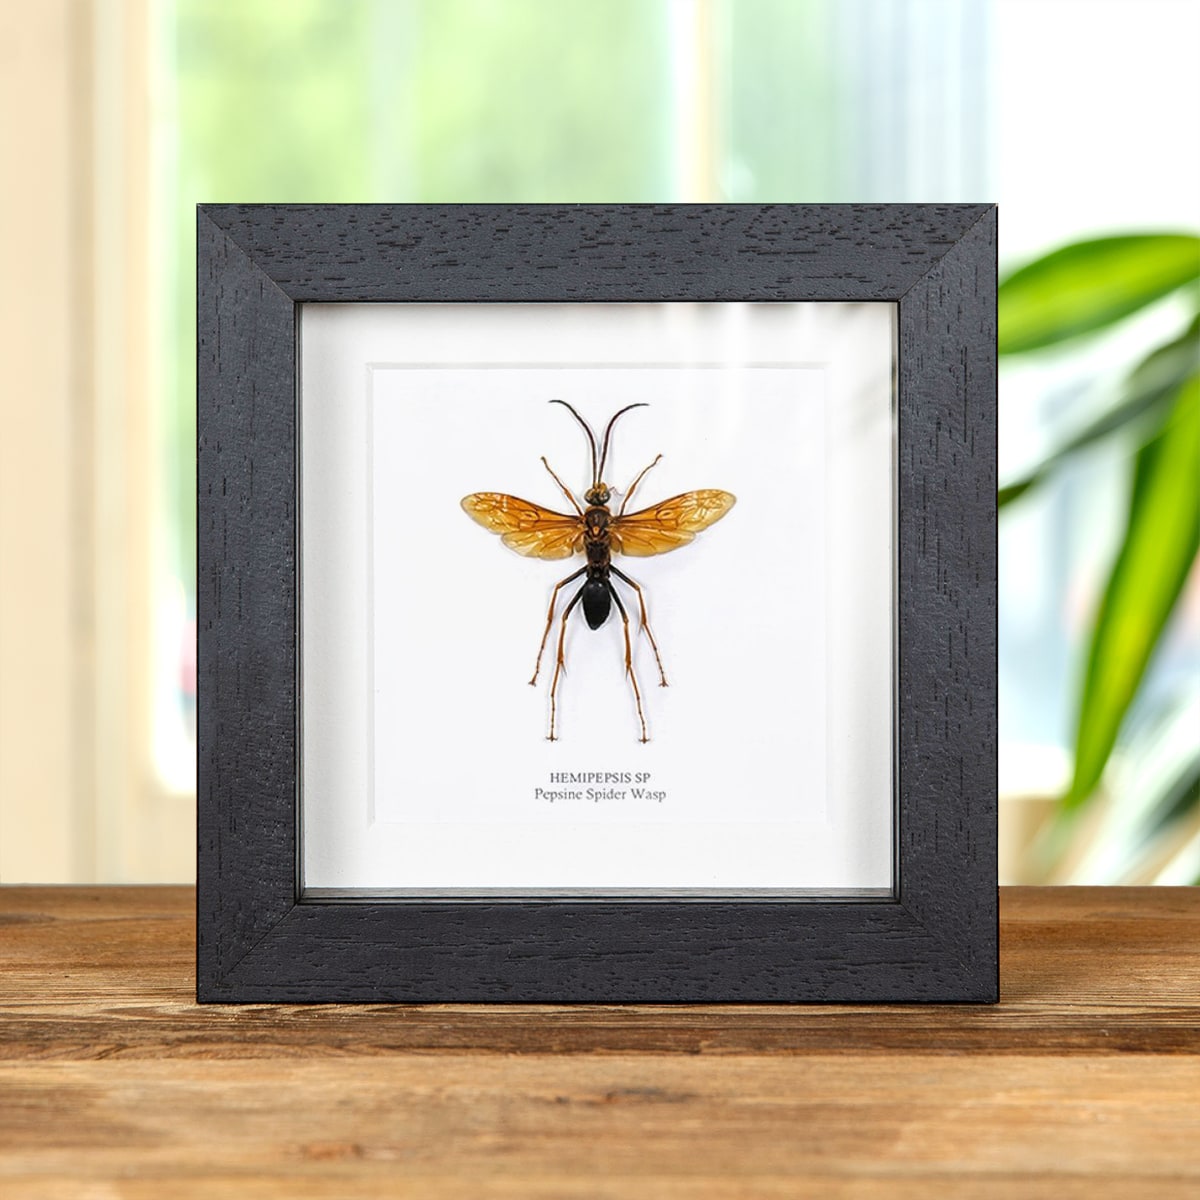 Minibeast Large Pepsine Spider Wasp in Box Frame (Hemipepsis sp)